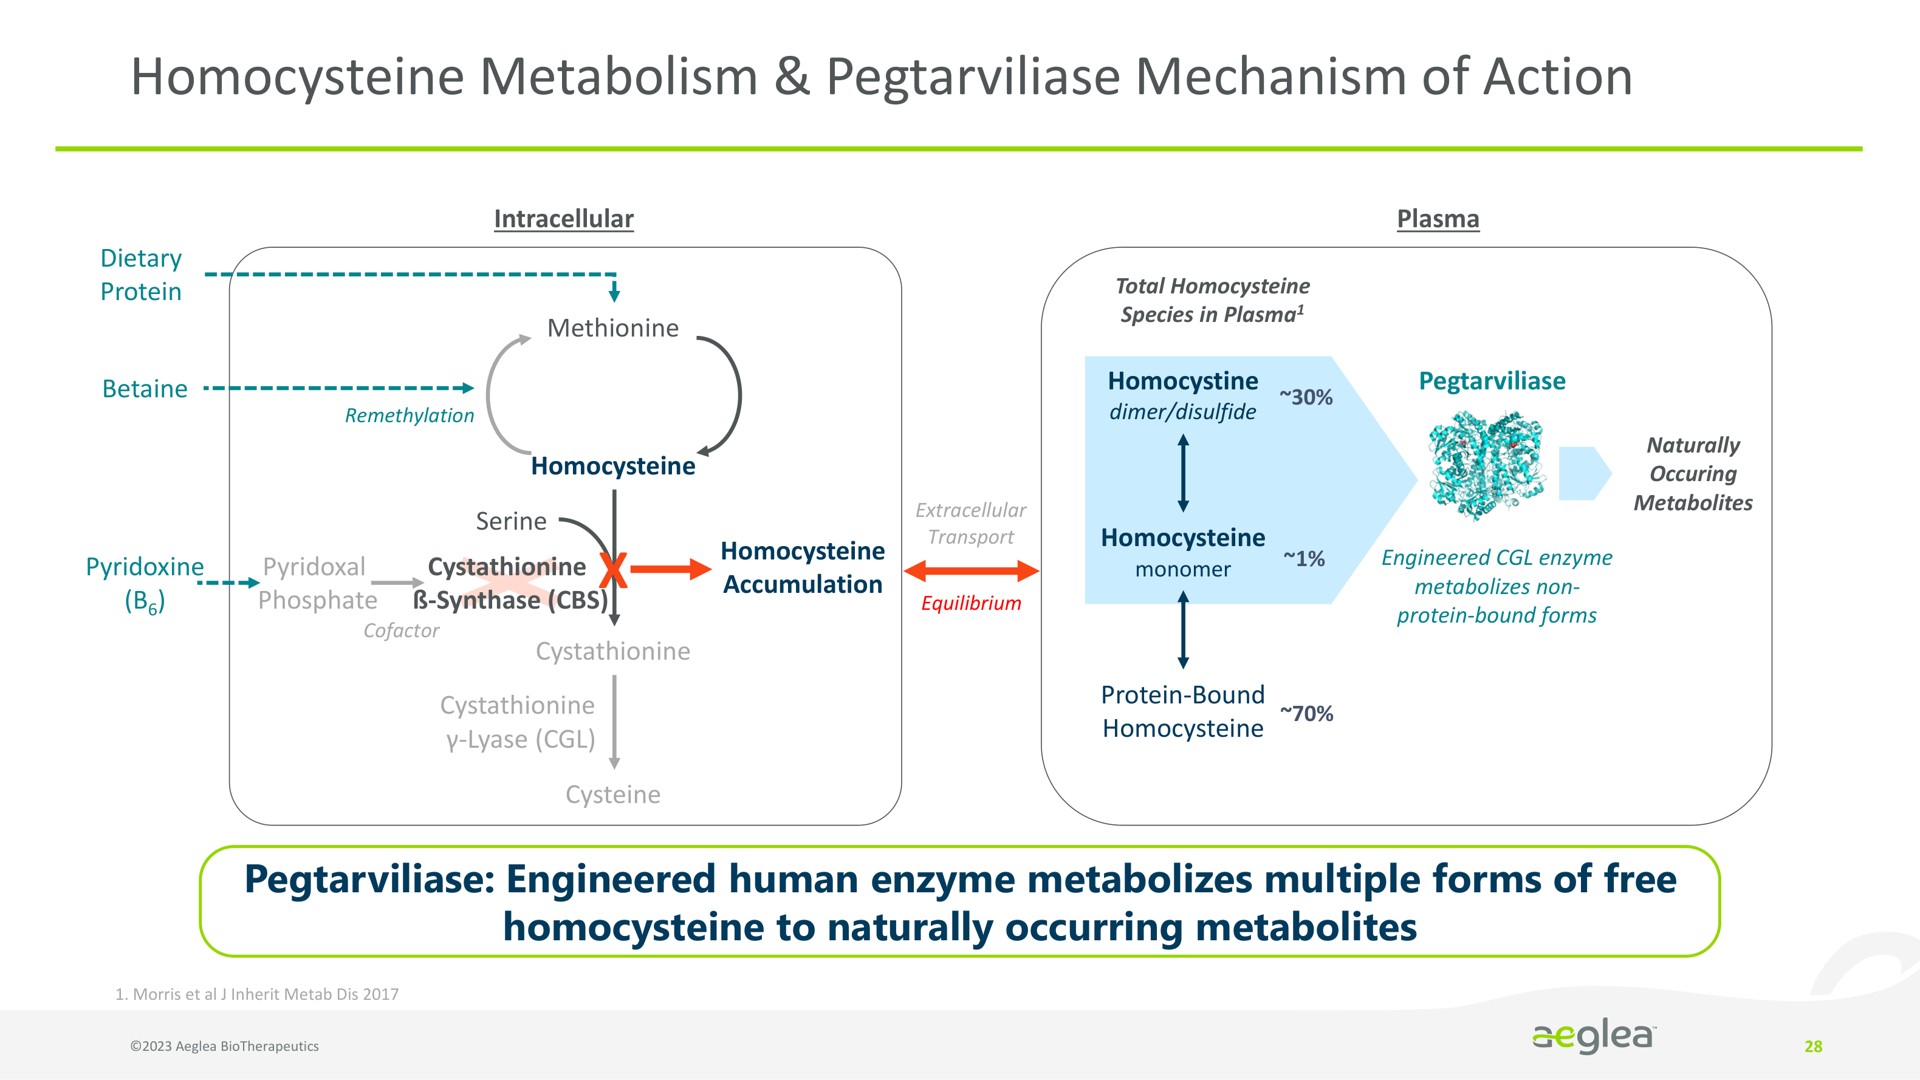 metabolism mechanism of action | Aeglea BioTherapeutics